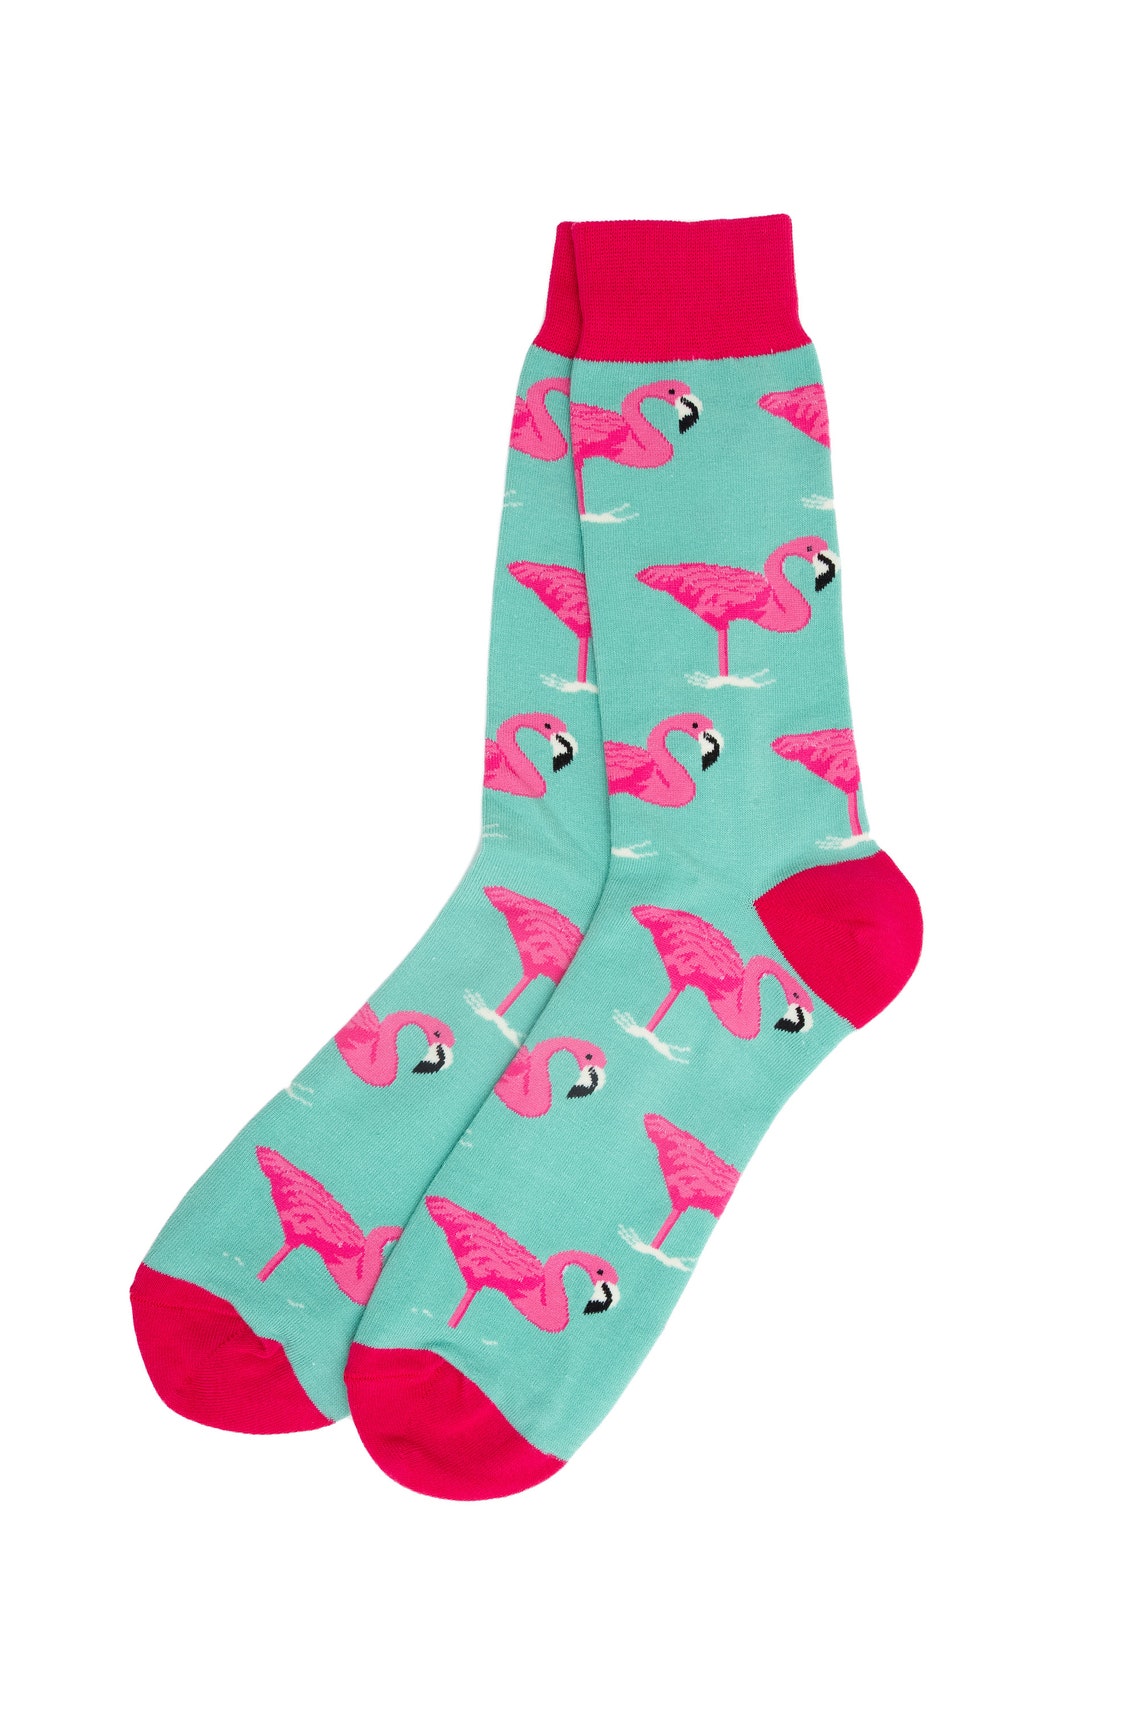 Flamingo Socks Happy Flamingo Socks Funky Socks Cool | Etsy